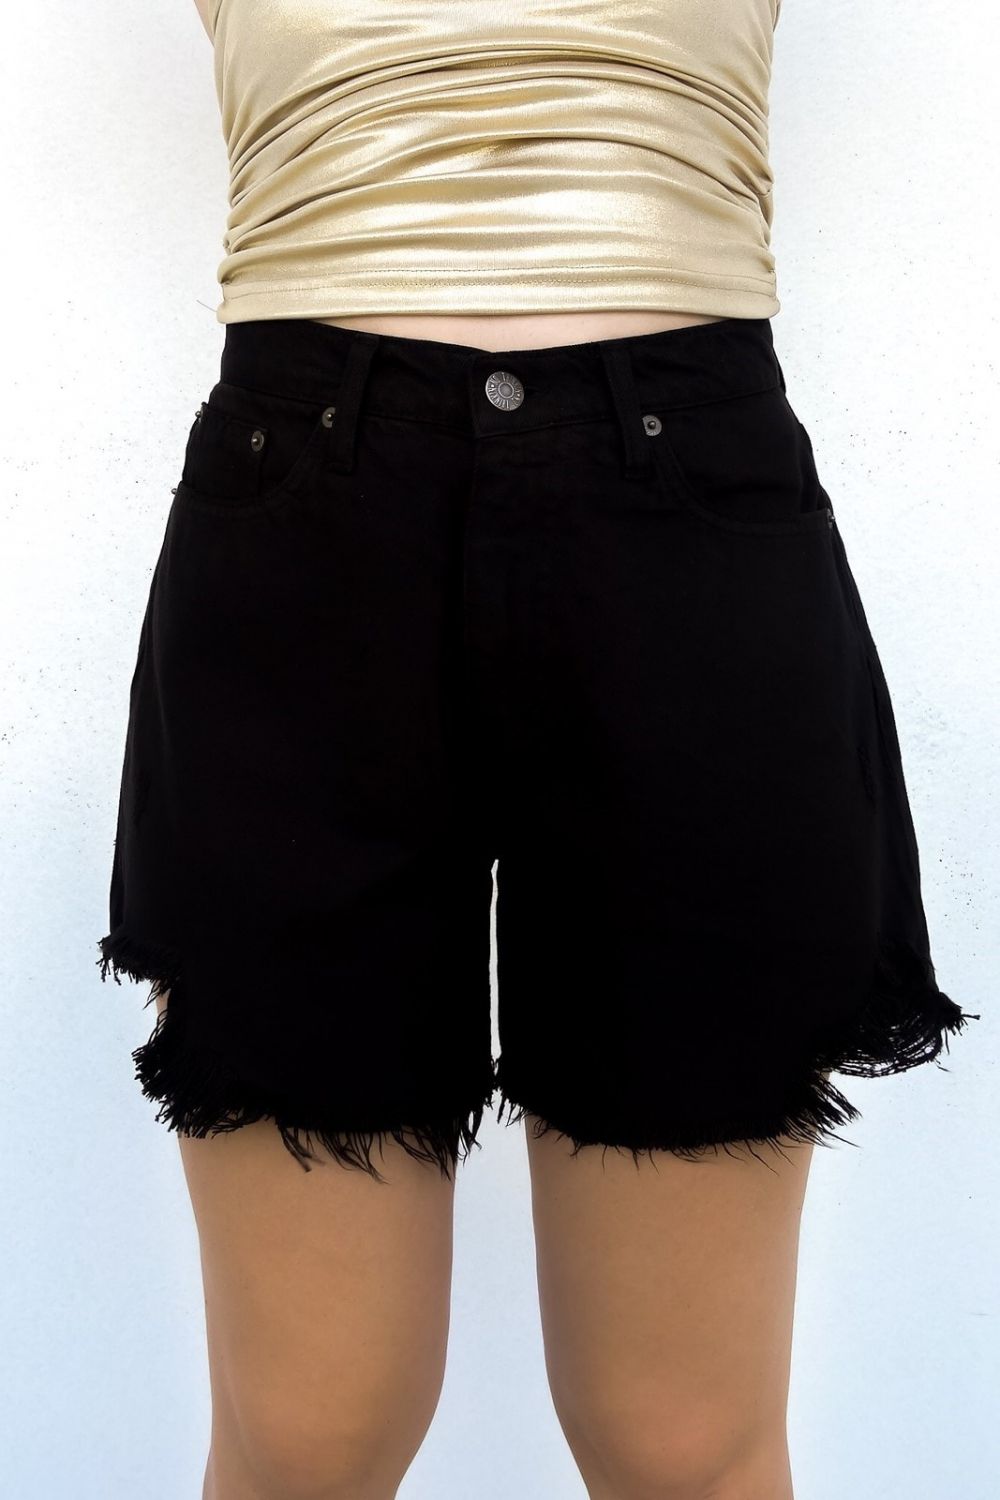 Fran black jean shorts